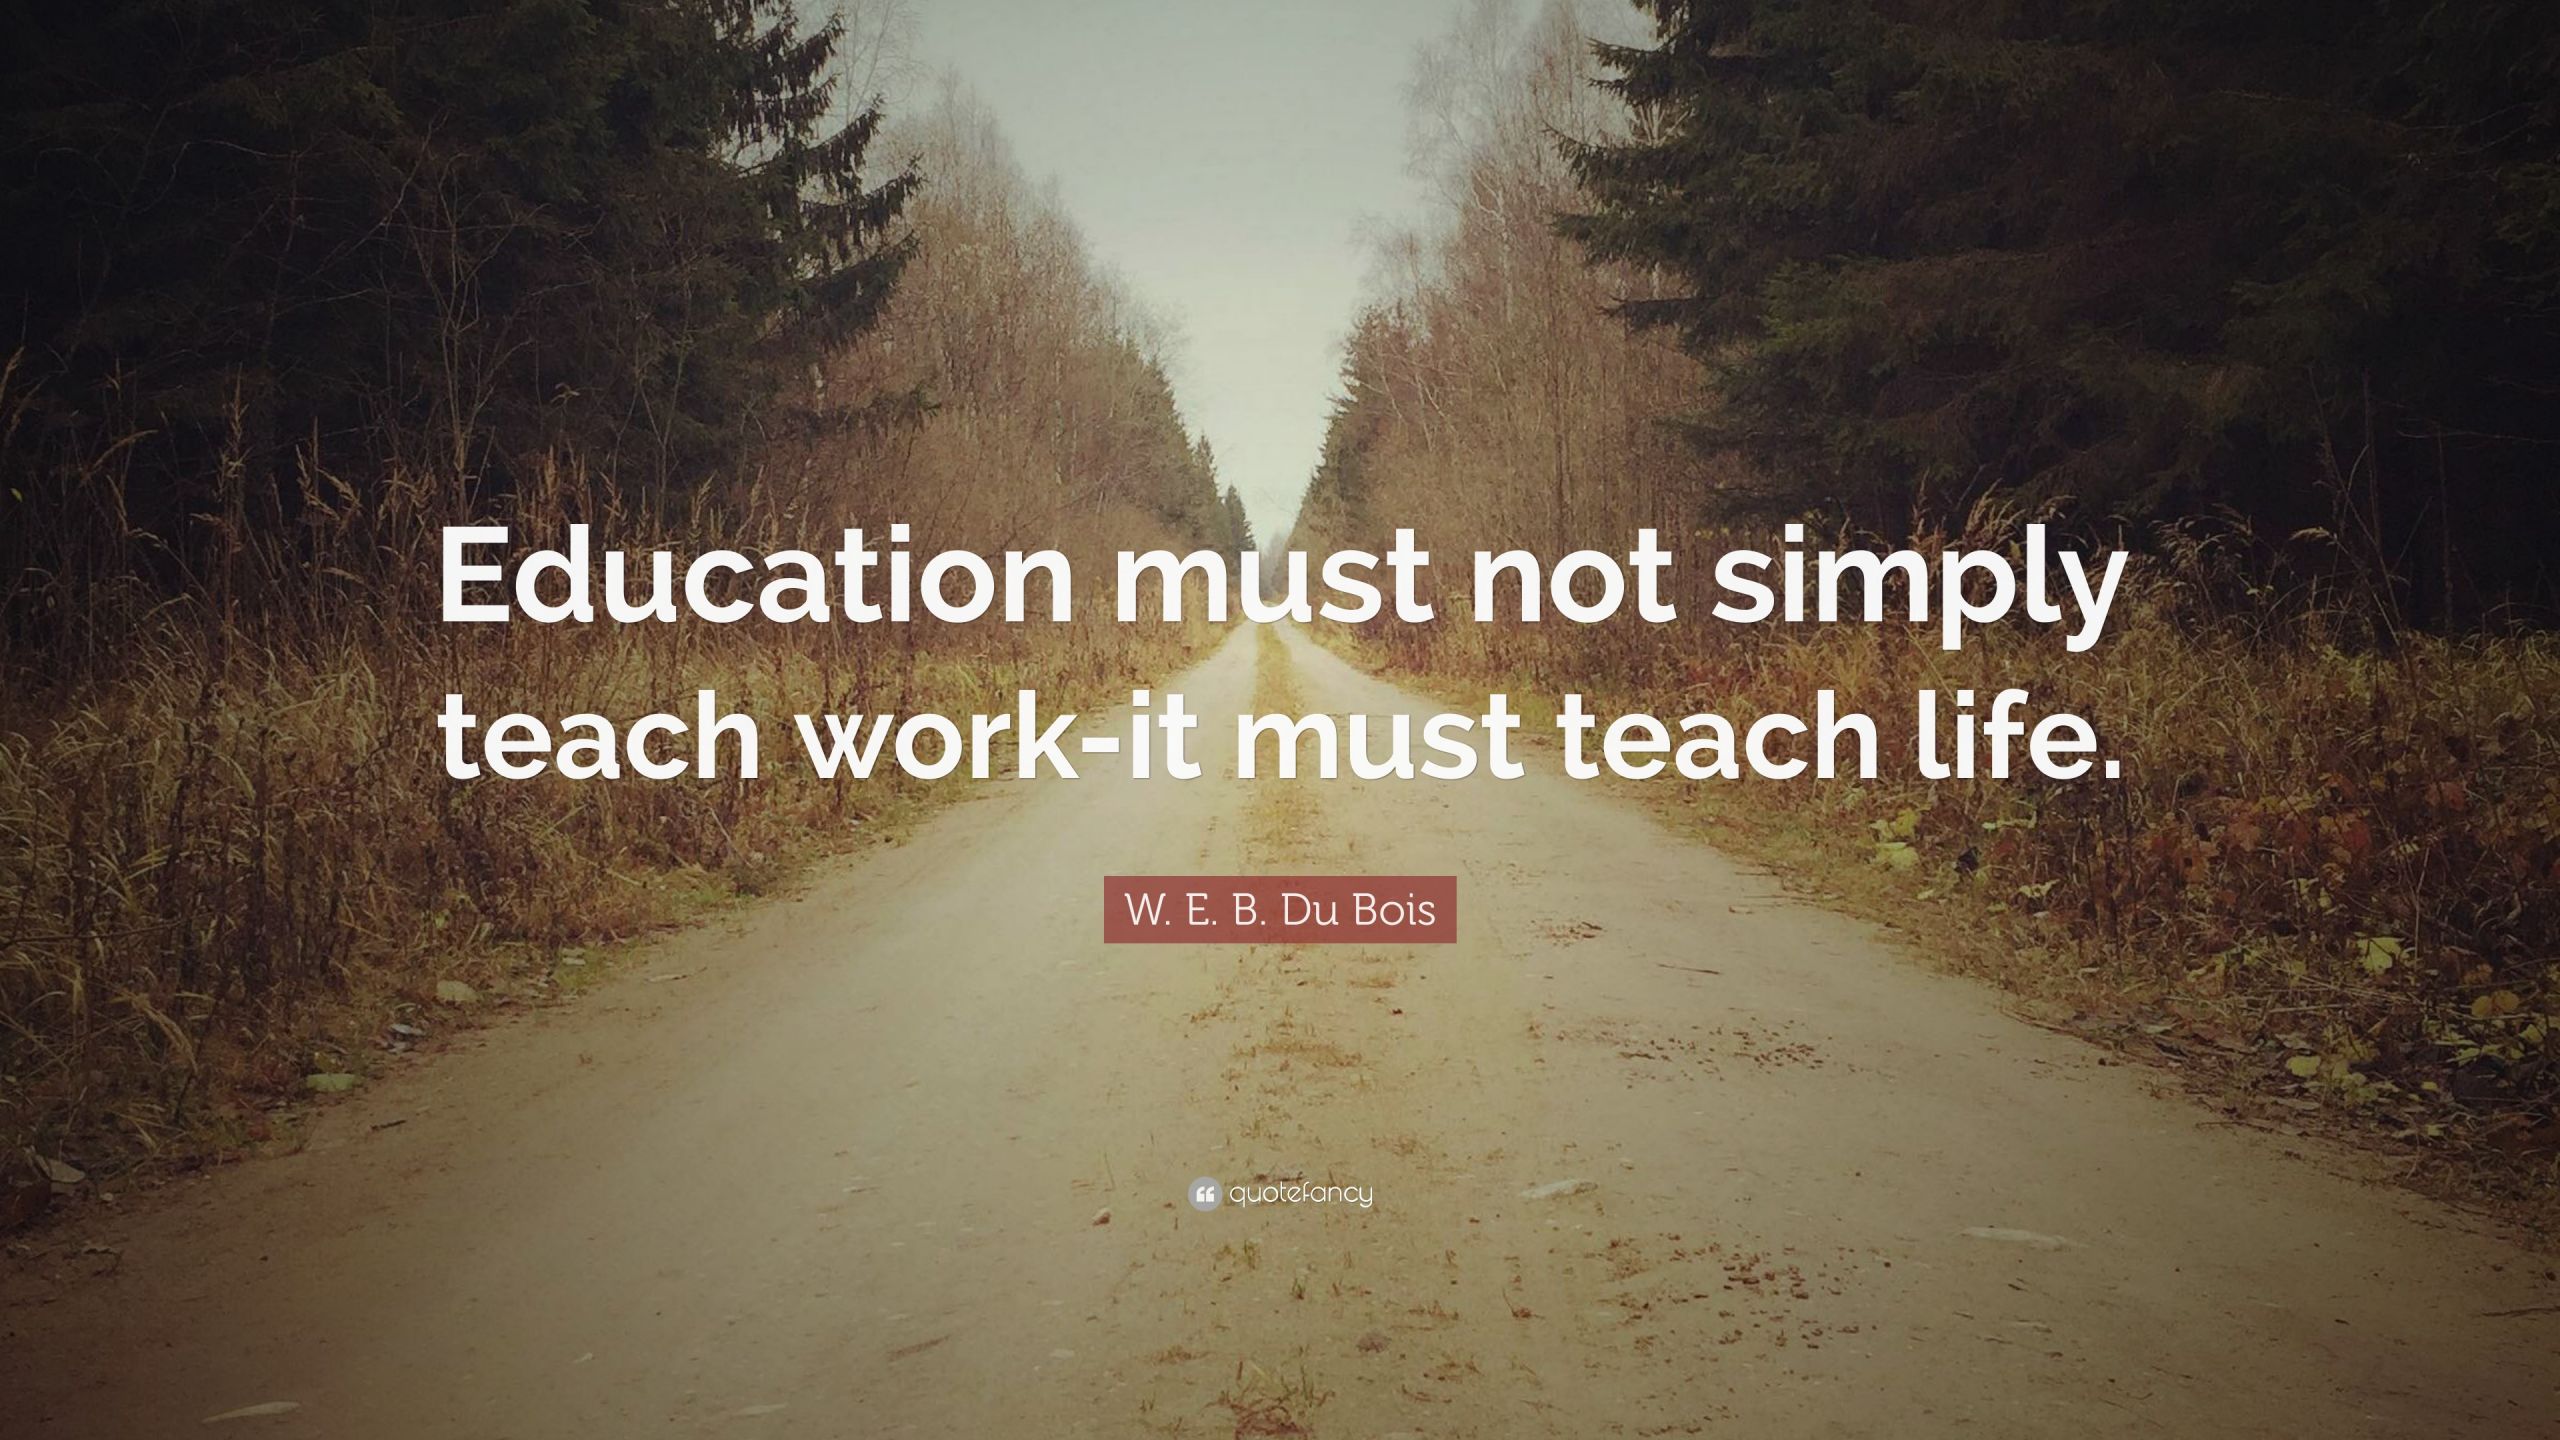 Web Dubois Education Quotes
 W E B Du Bois Quote “Education must not simply teach